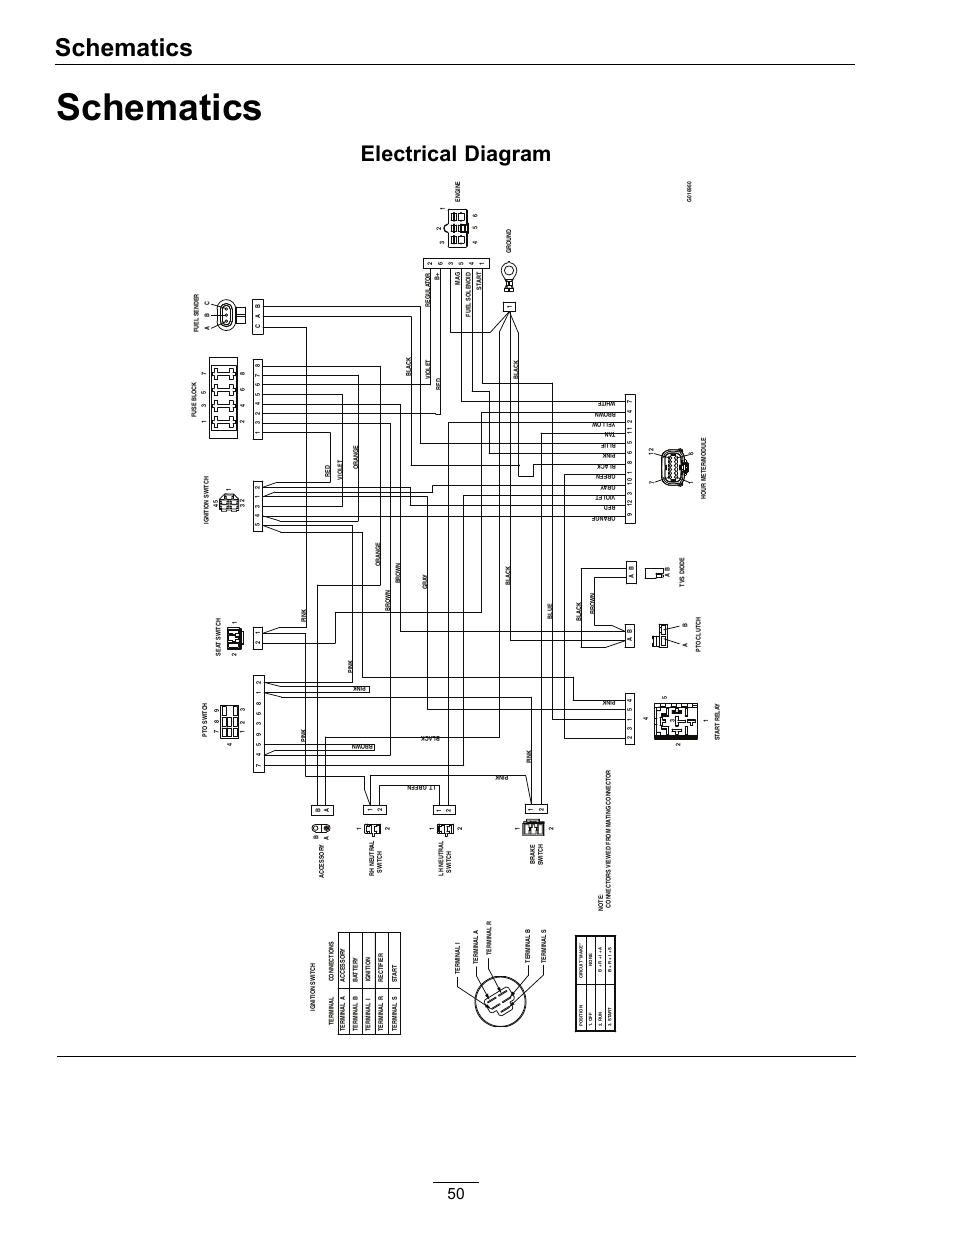 pafac 153-1 air compressor wiring diagram